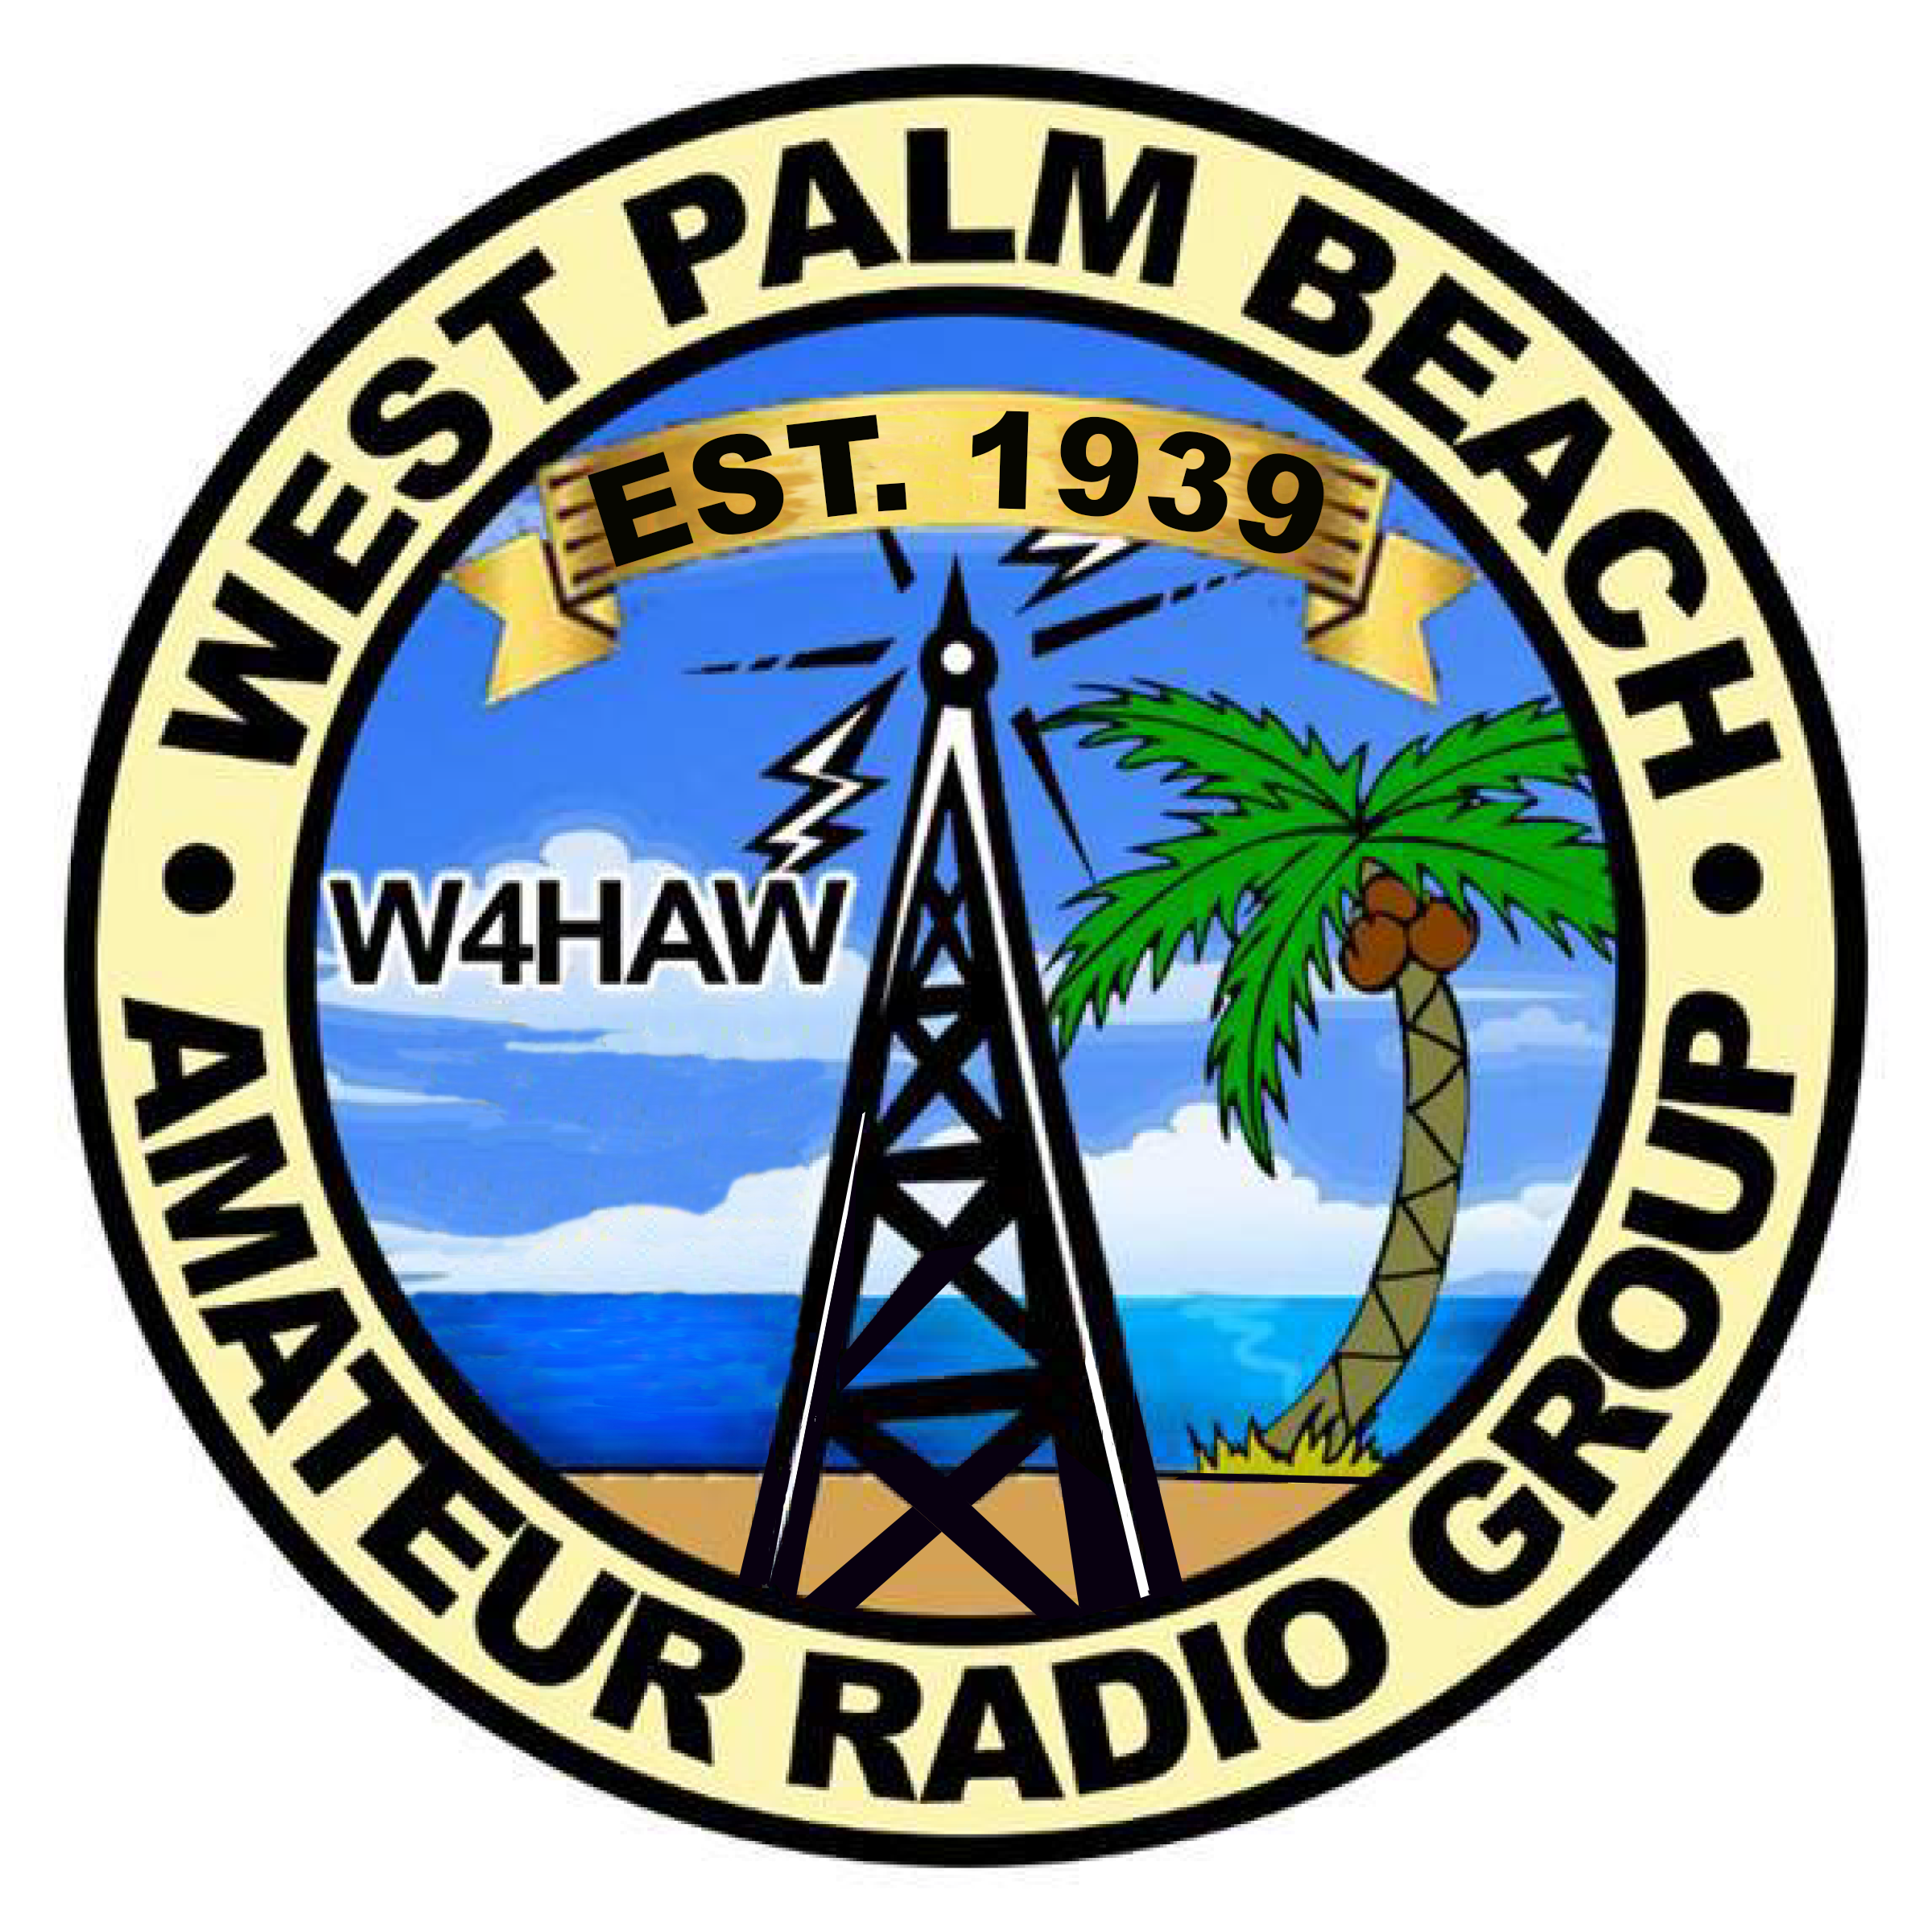 West Palm Beach Amateur Radio Group, Inc.